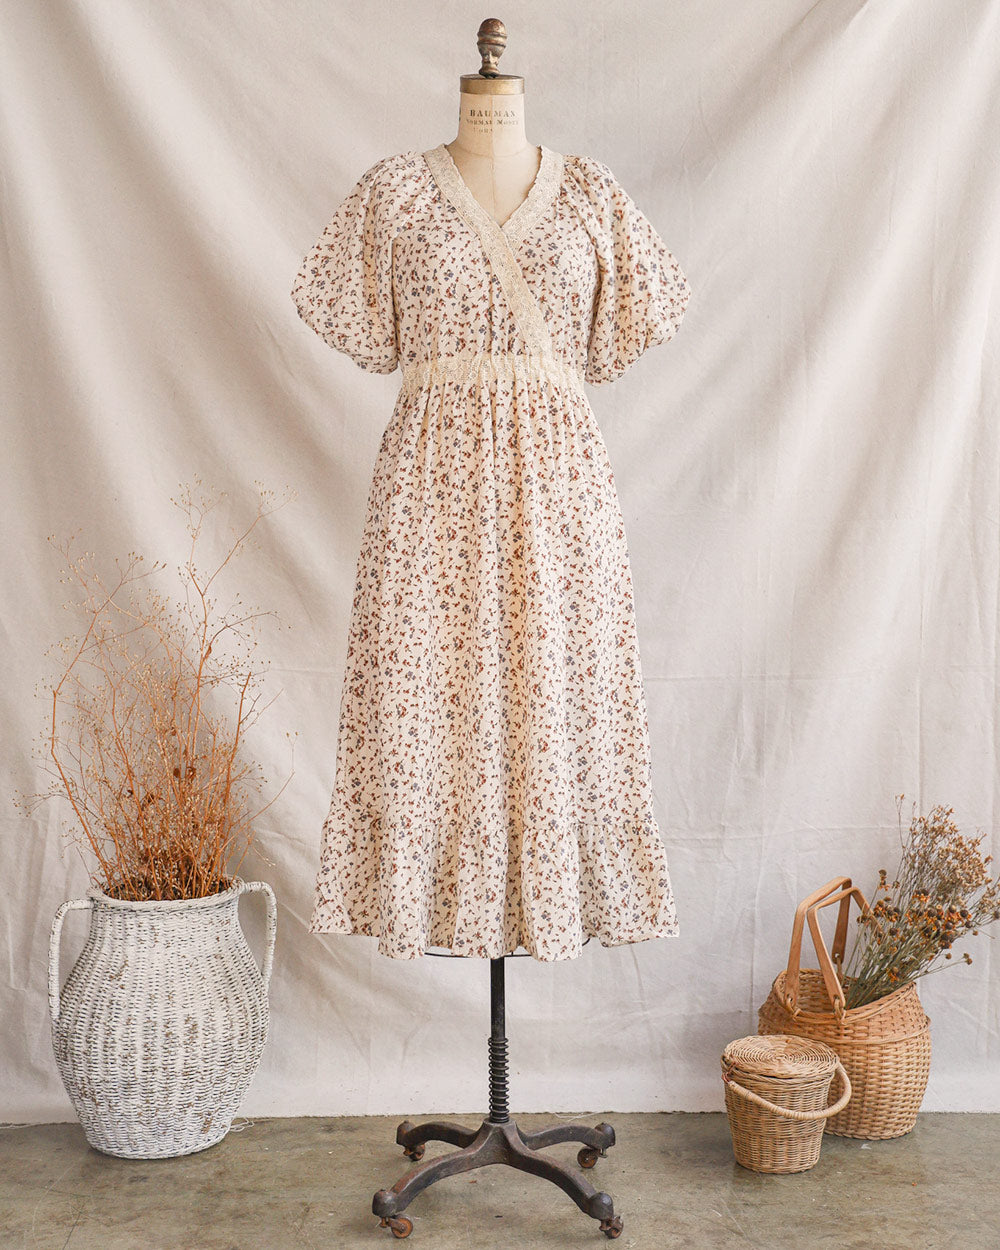 Vintage Inspired Dresses / Romantic Feminine Dresses / Floral 